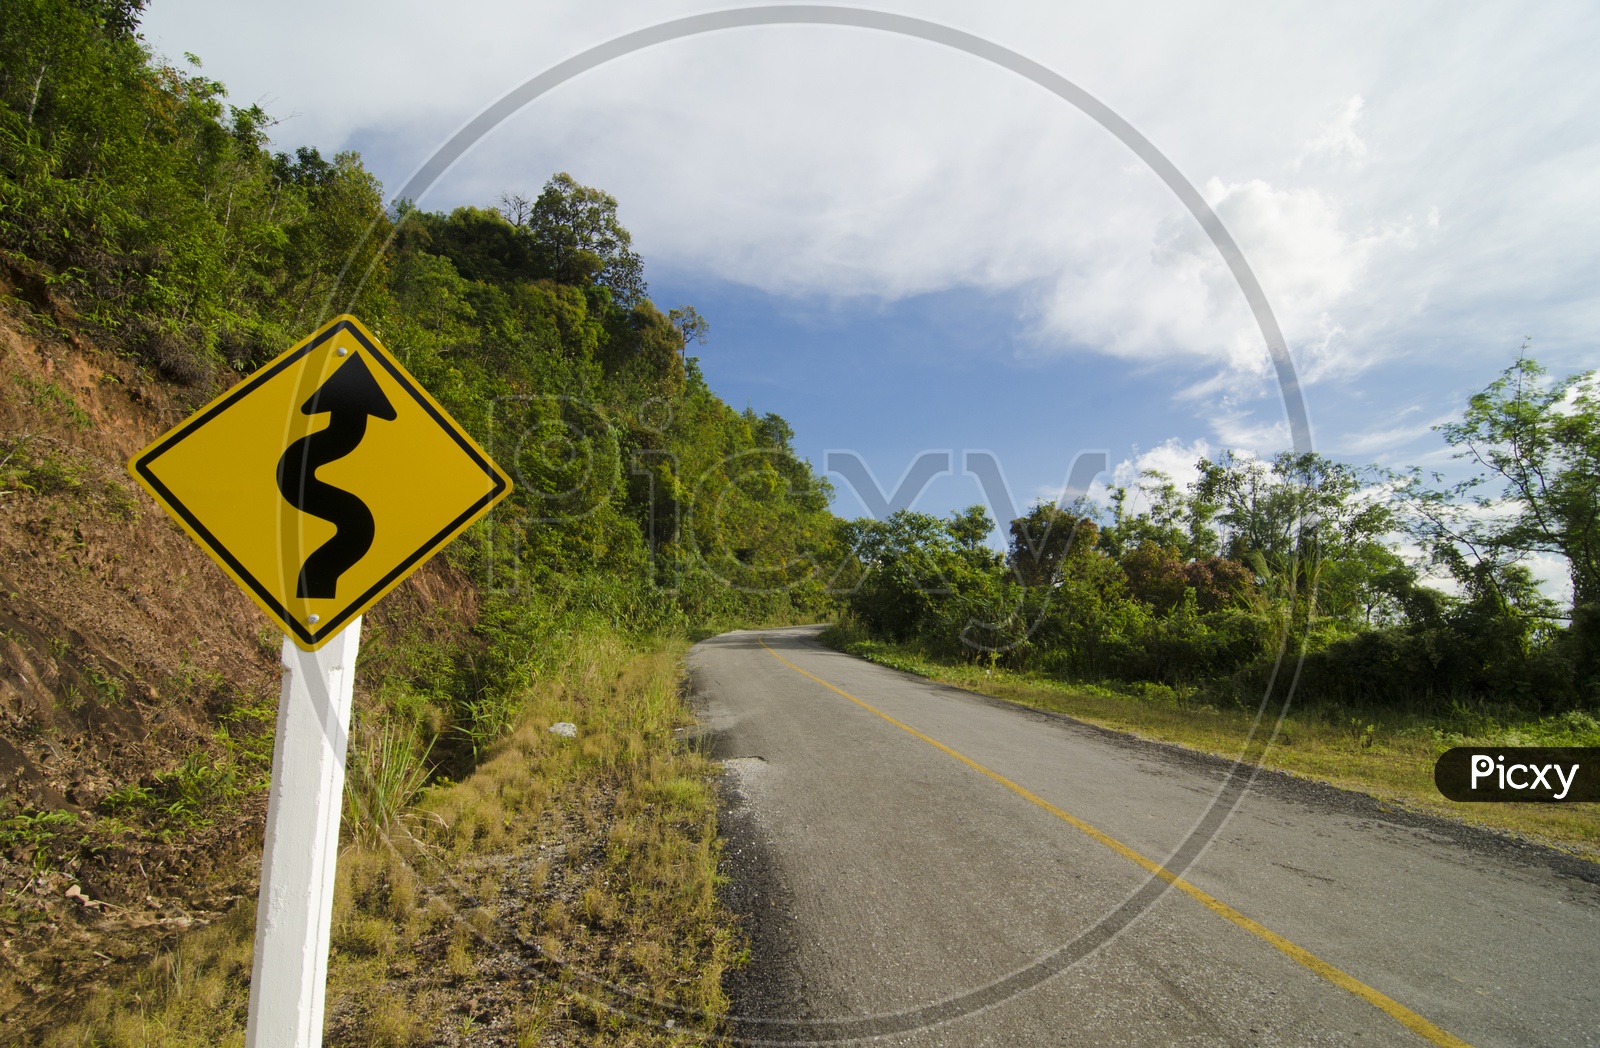 Zig-zag  Road Sign Or Warning  Board in a Terrain Or Ghat  Road